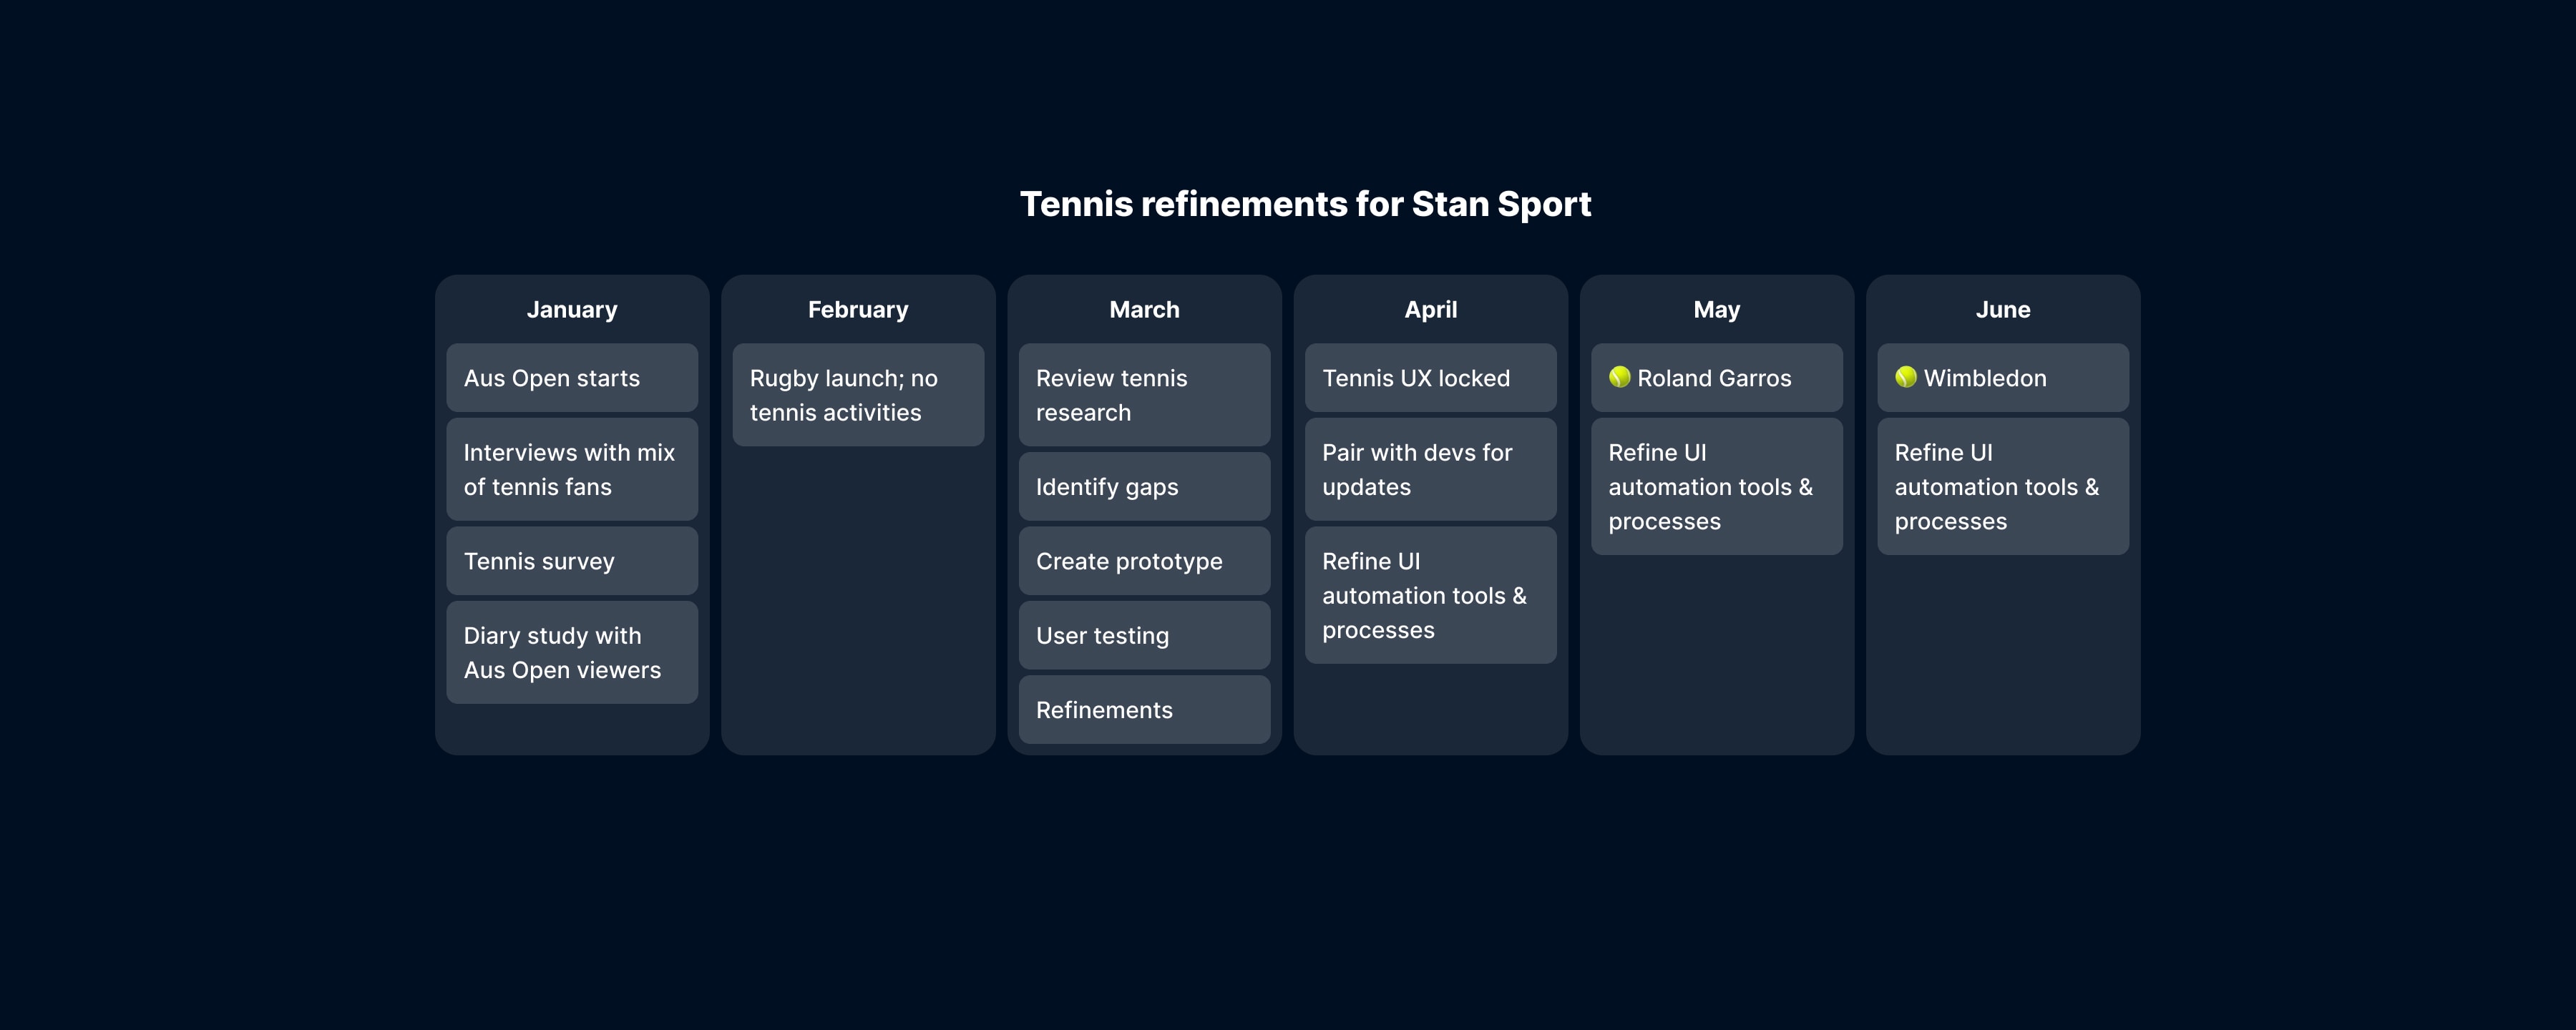 Tennis refinements for Stan Sport